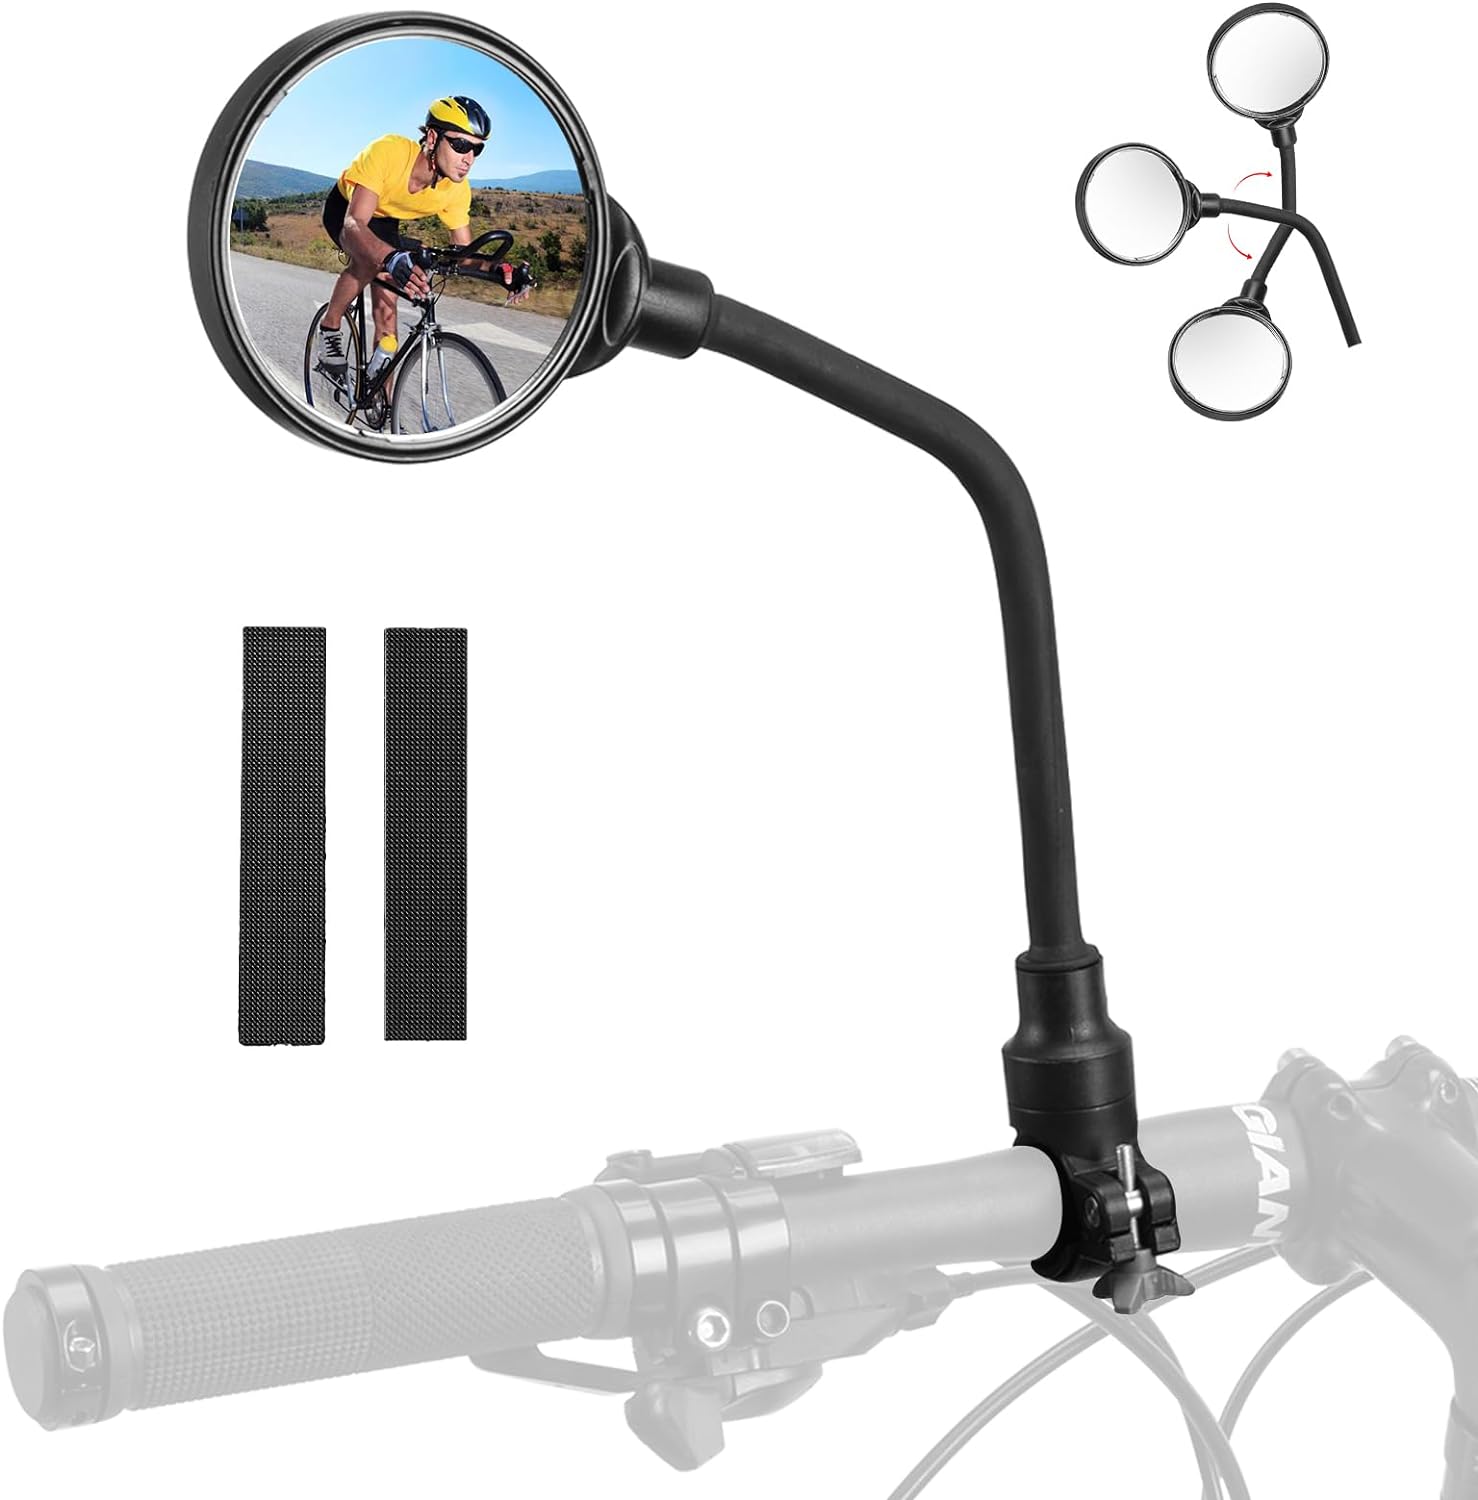 ROCKBROS Bike Mirror Handlebar Mount 360°Rotatable Adjustable